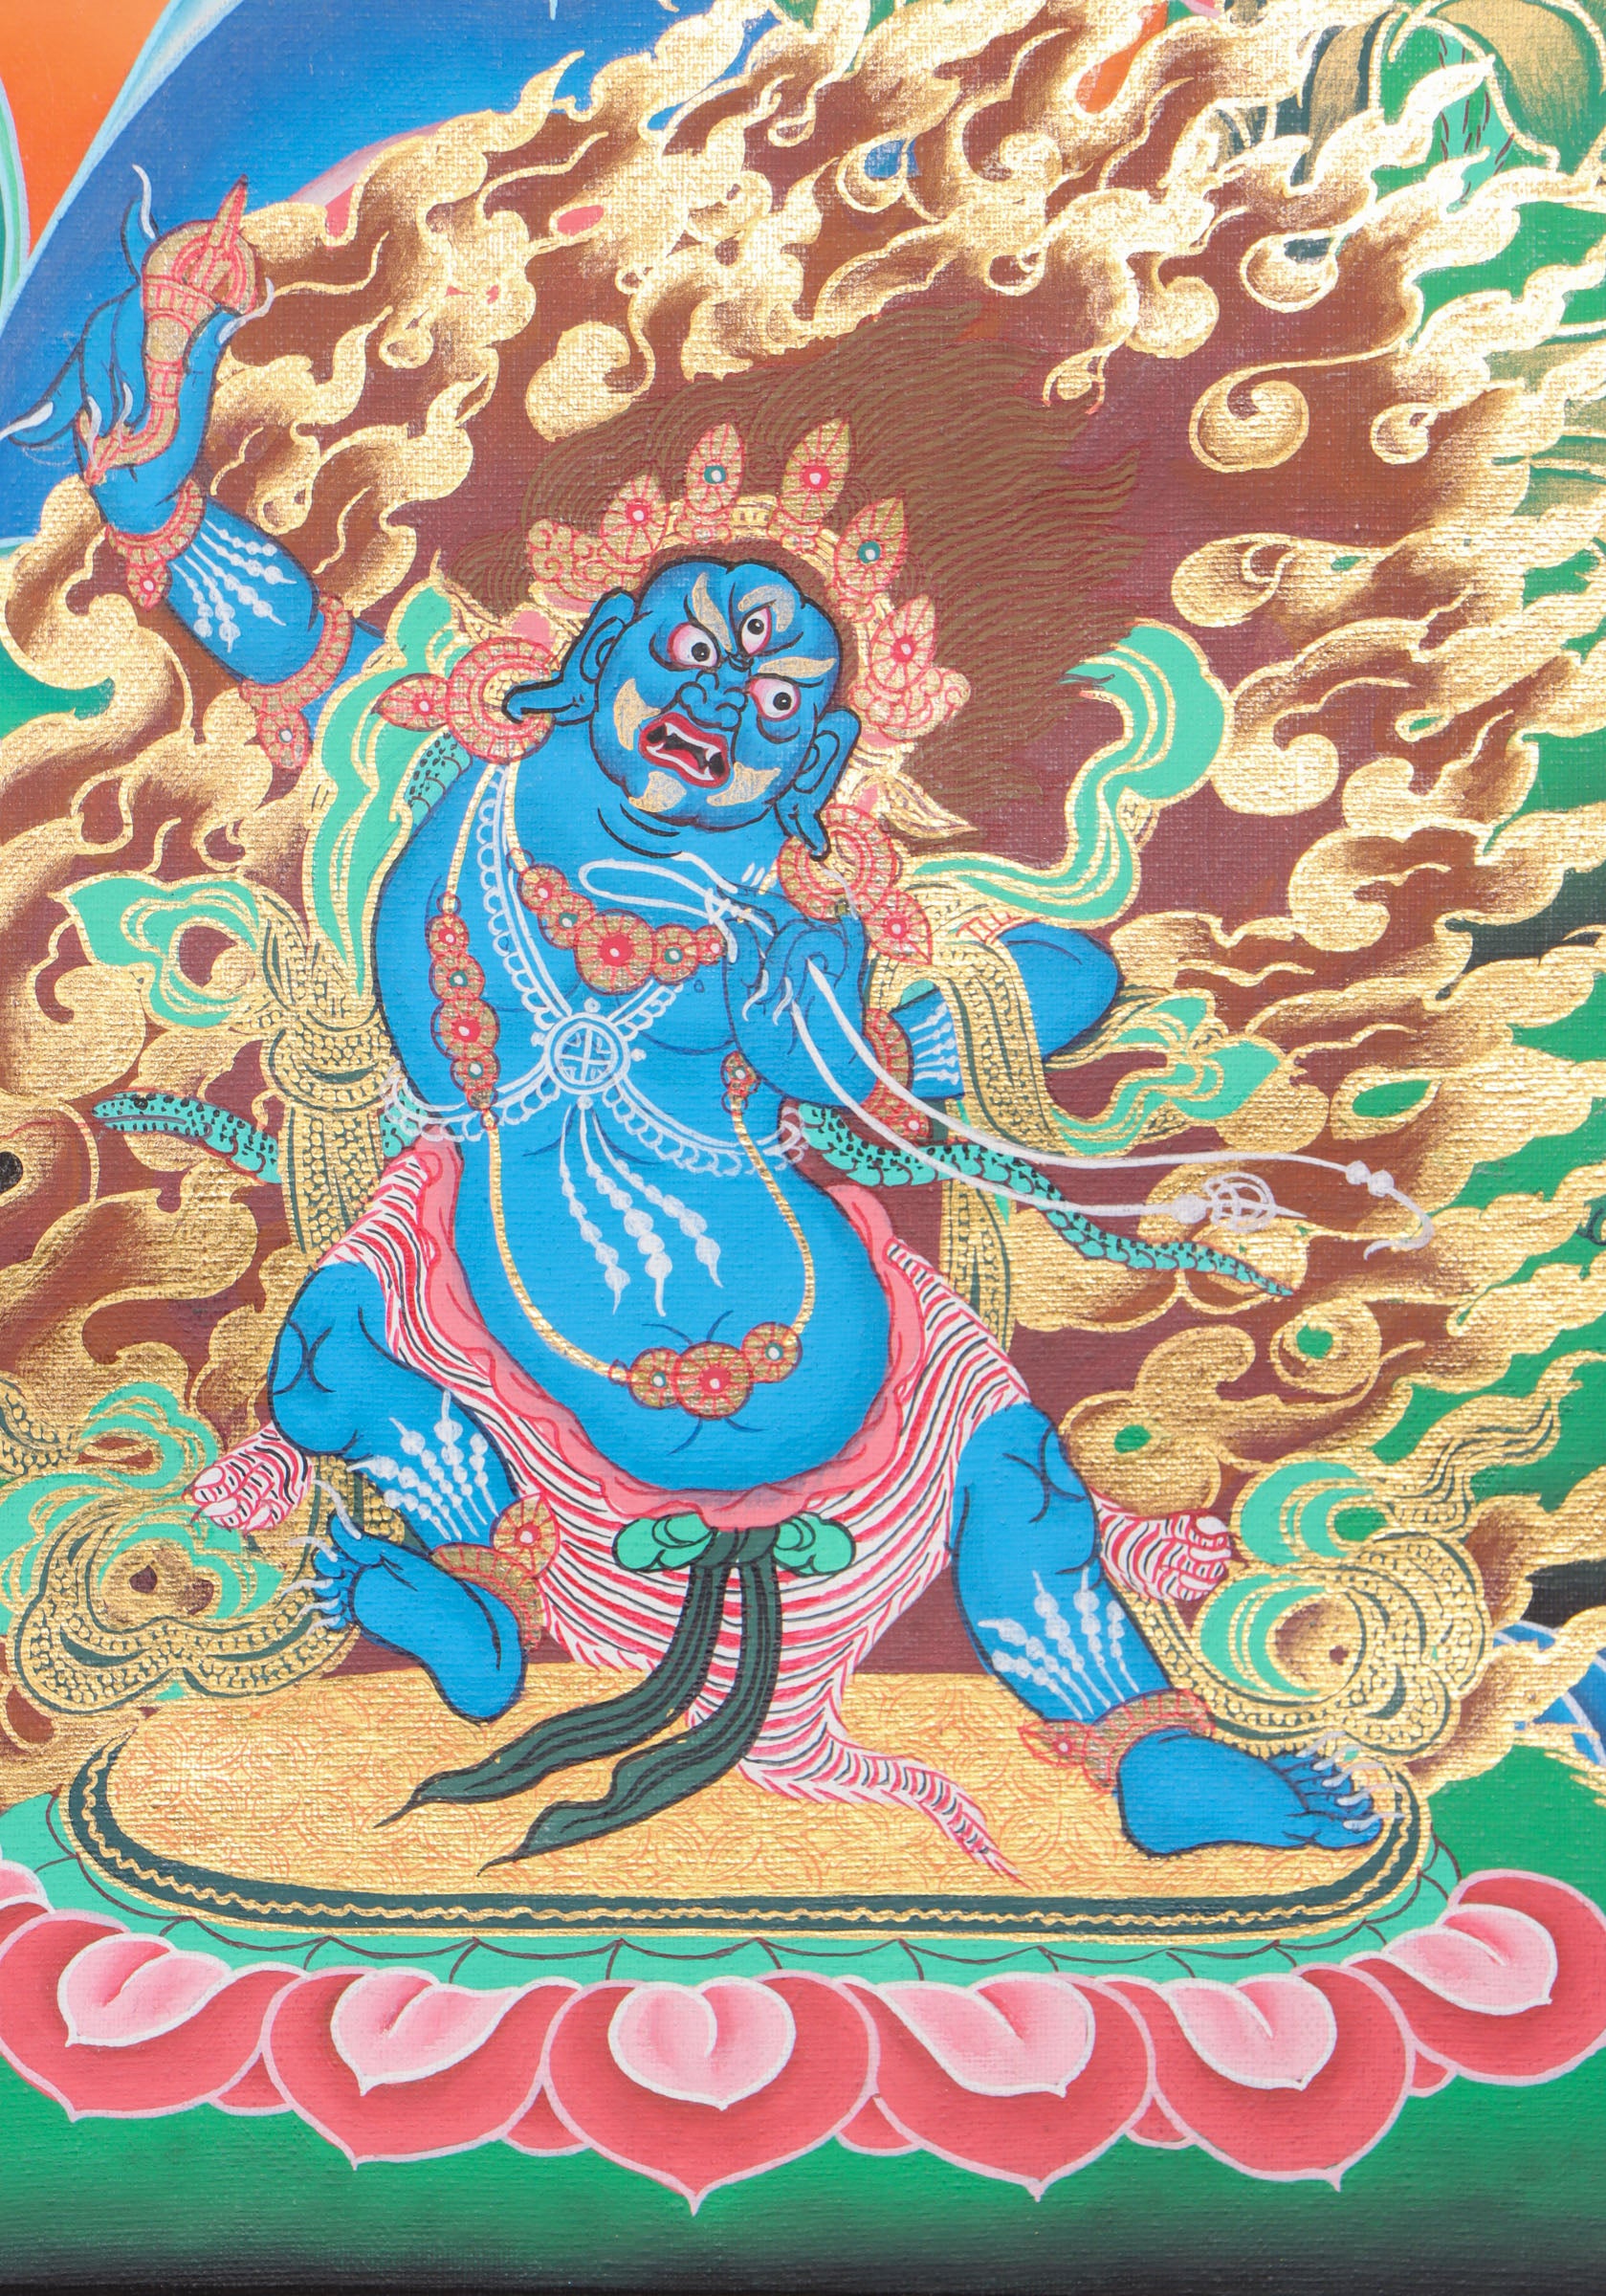 Chengresi Thangka for meditation and prayer.